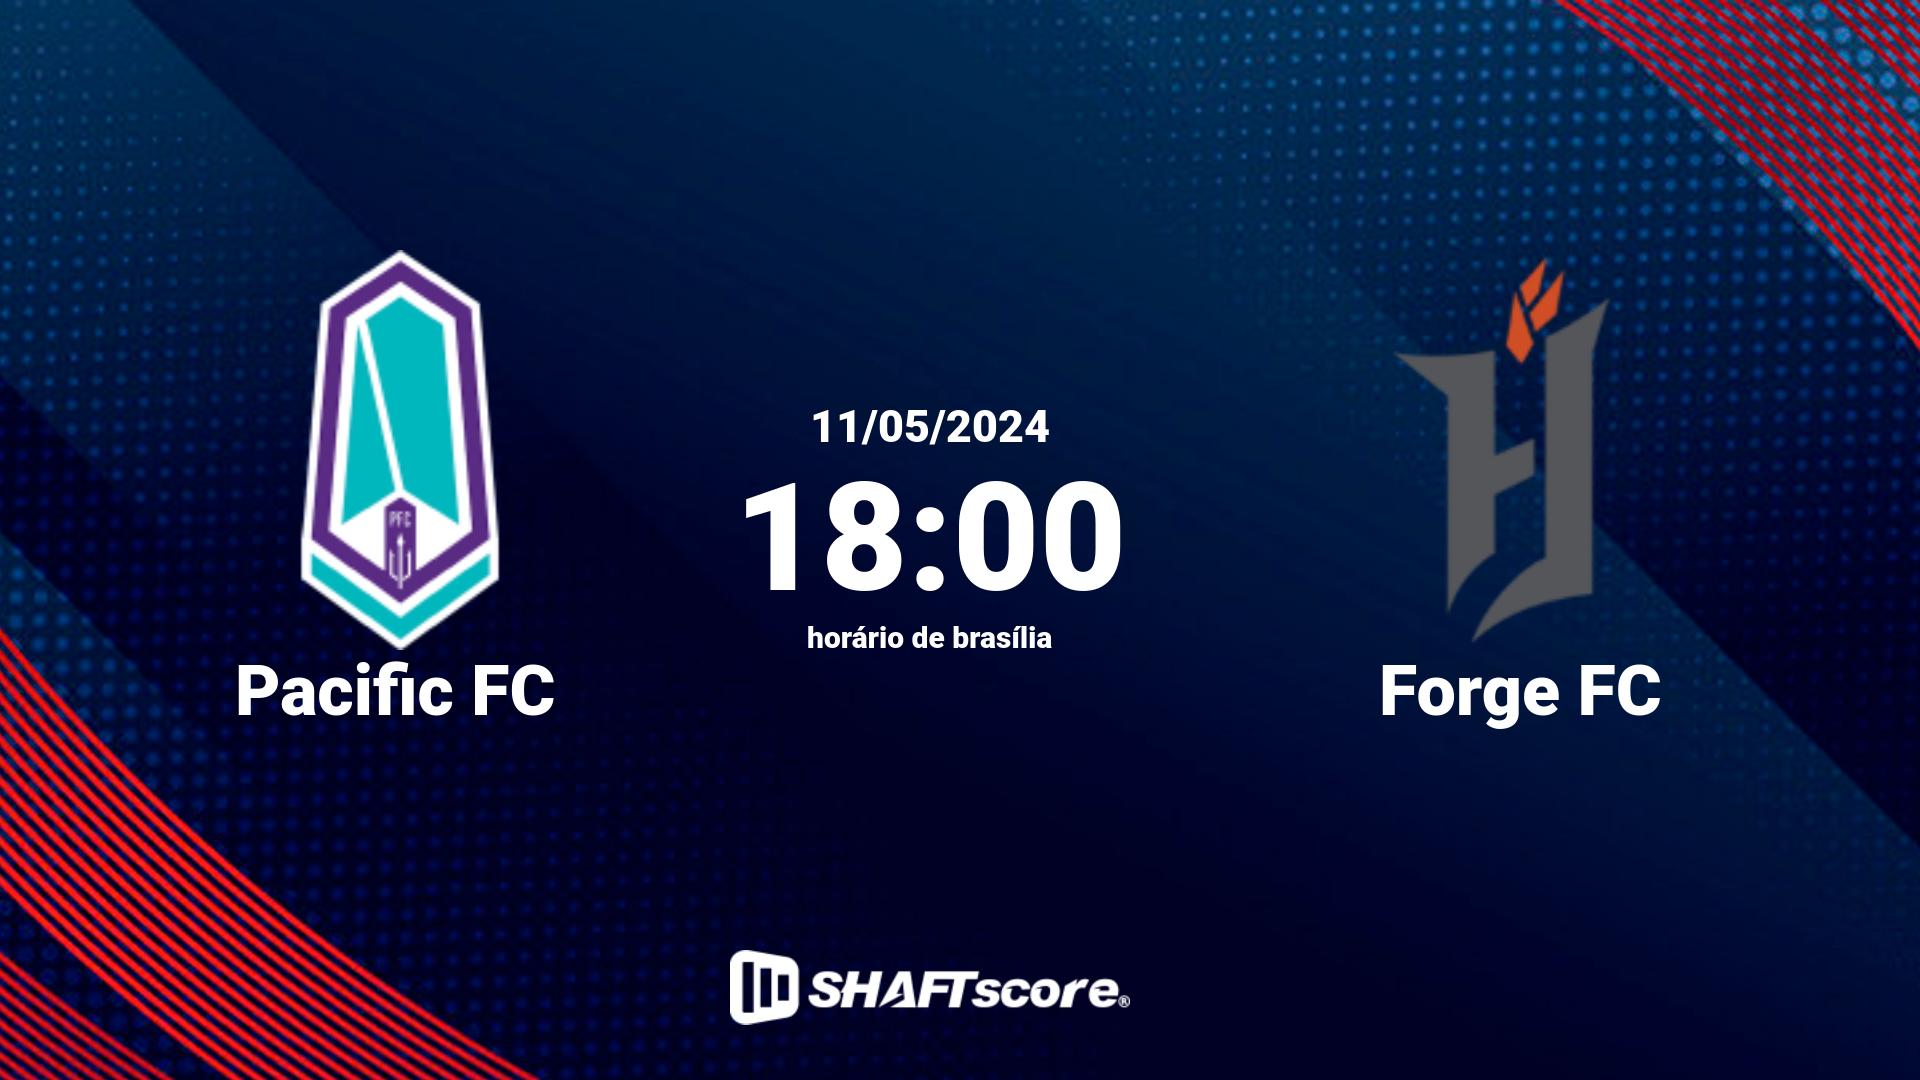 Estatísticas do jogo Pacific FC vs Forge FC 11.05 18:00